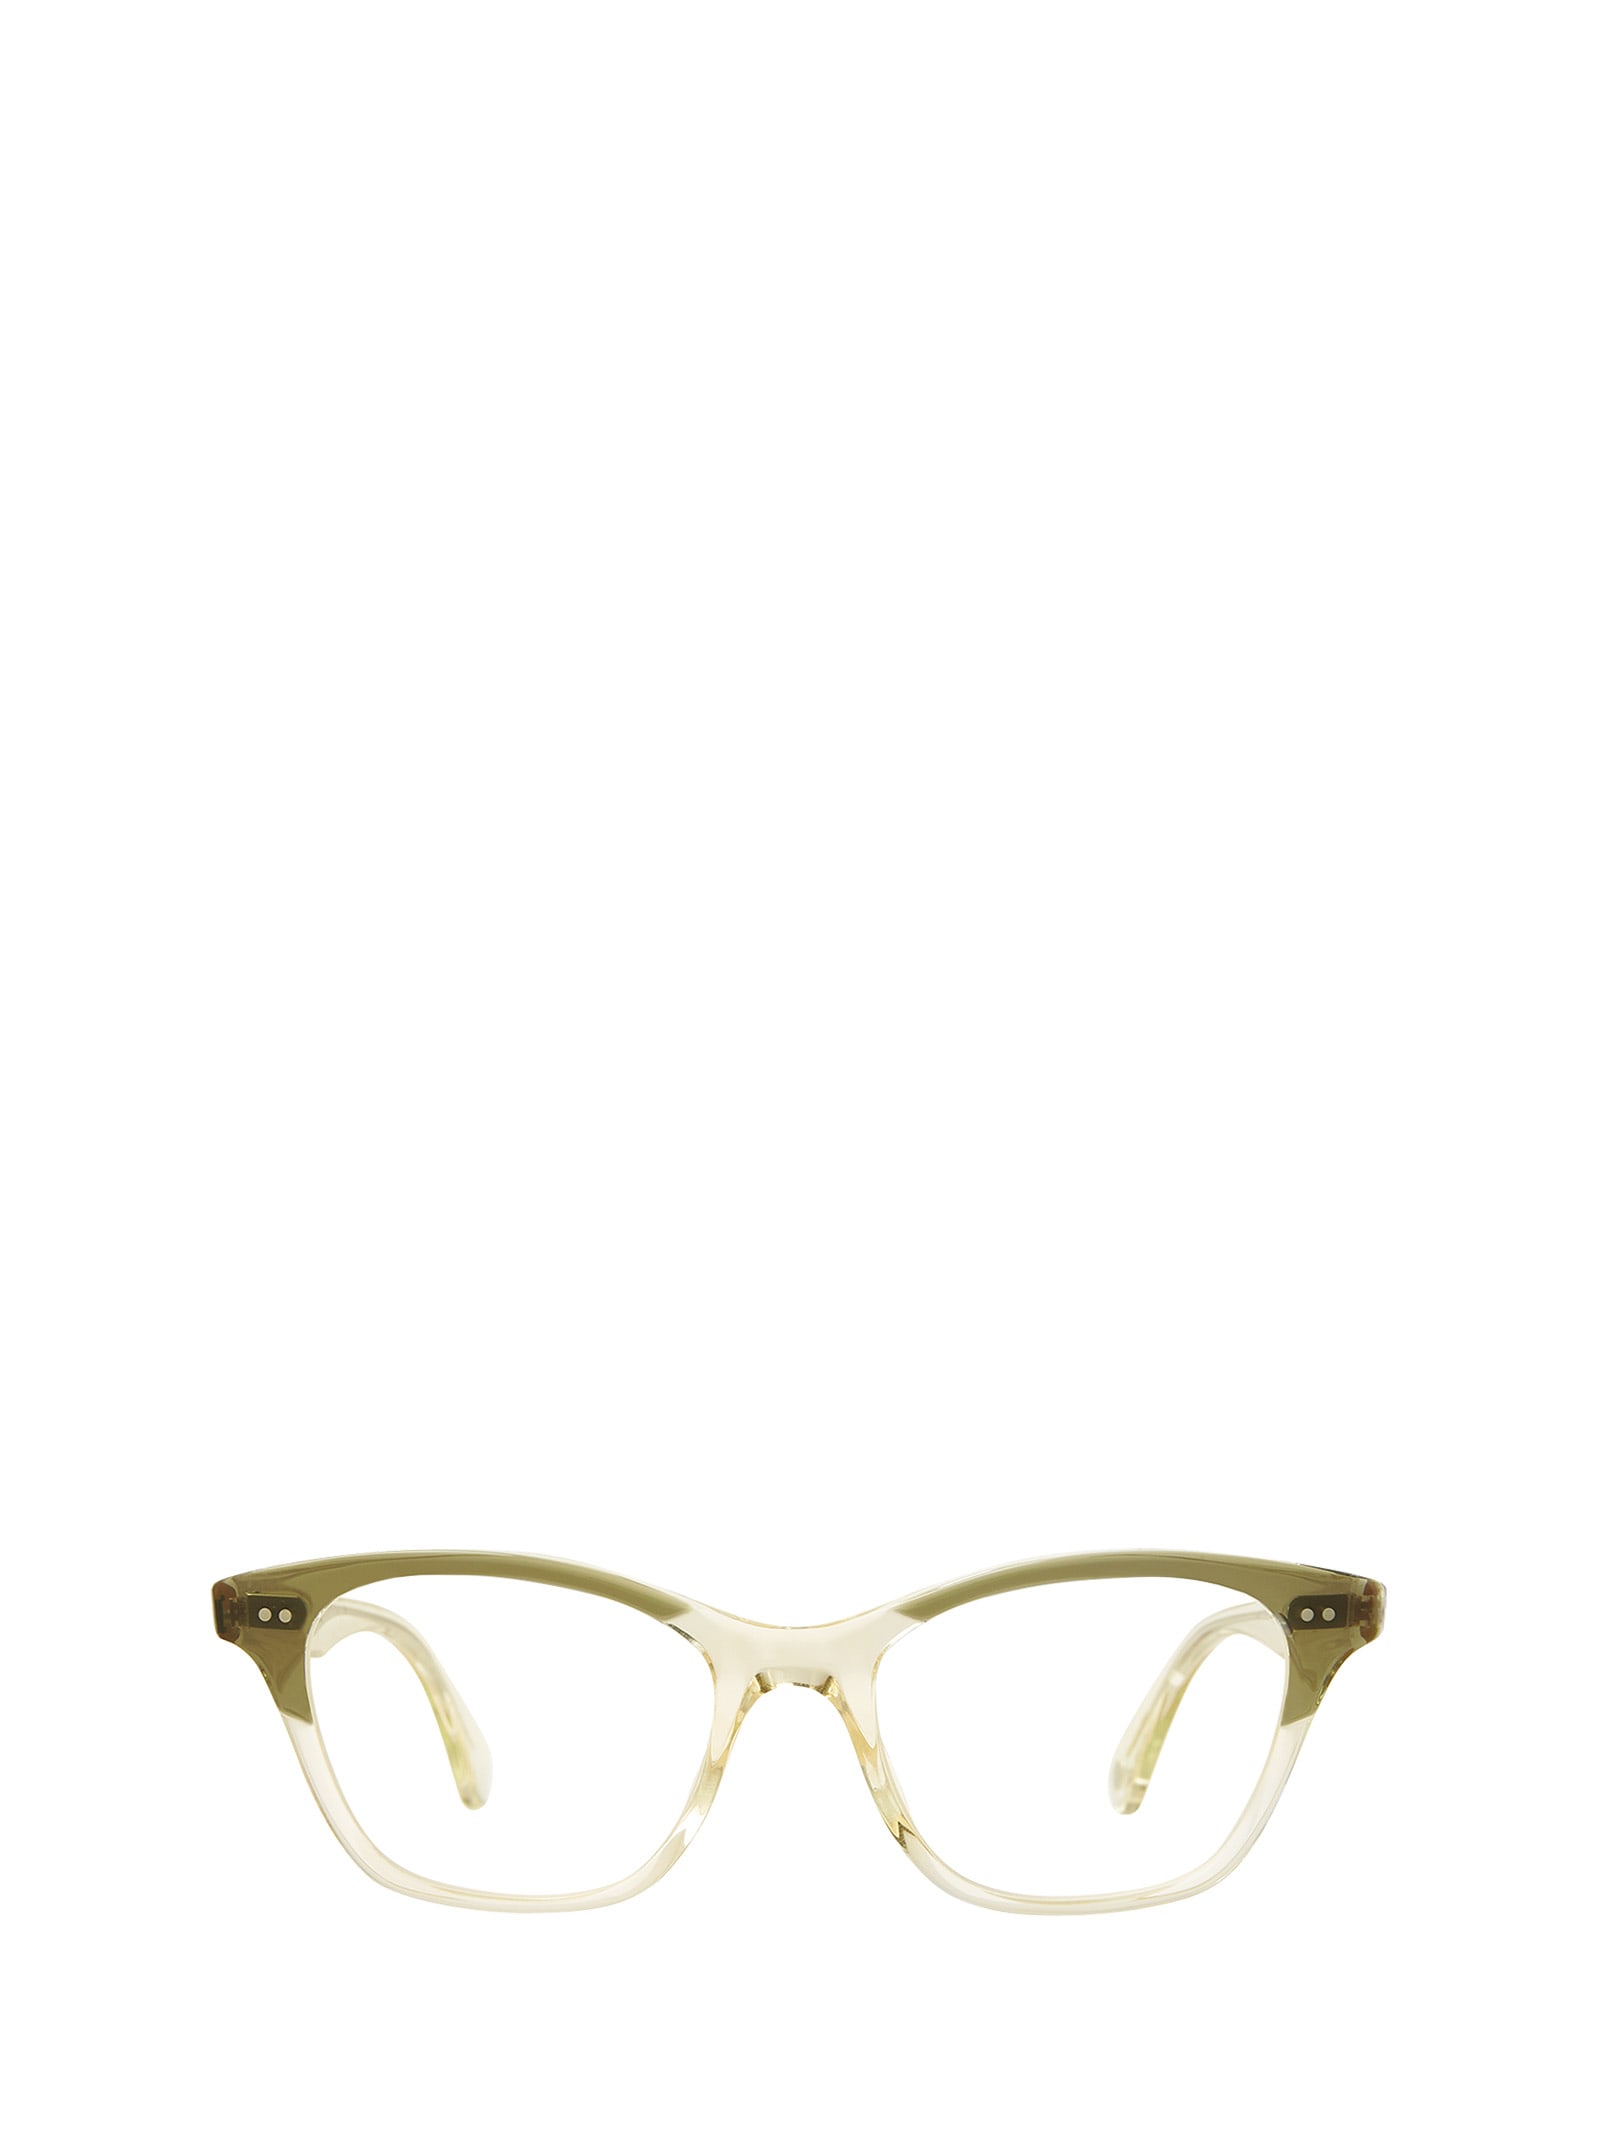 Lily Olive Laminate Glasses